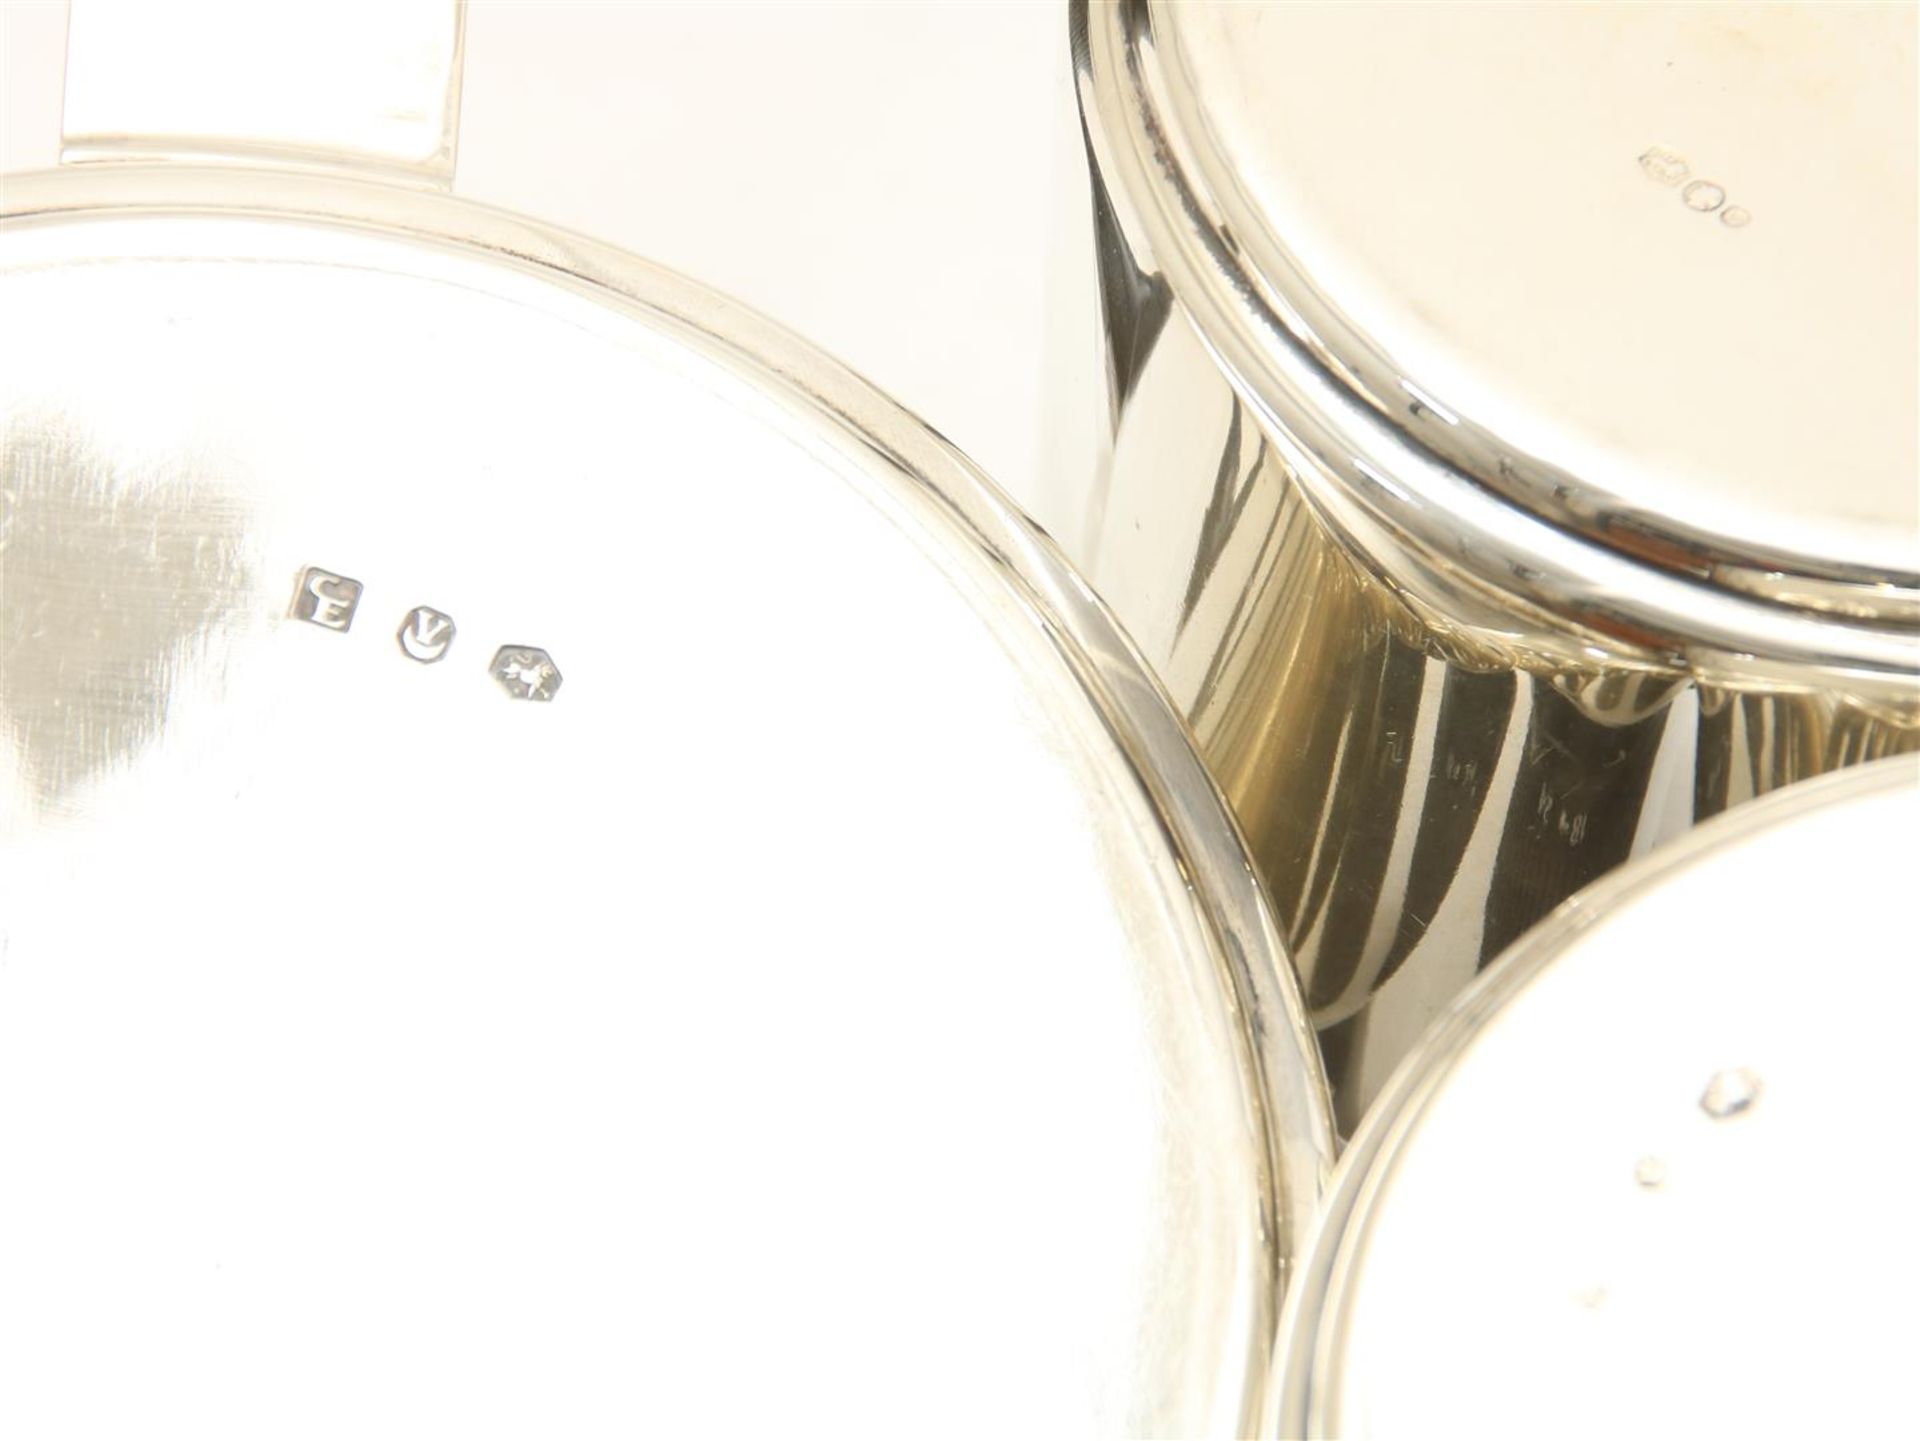 Silver Art Deco tea set with ebony handle and knob, grade 835/000, designer mark: "CE": Christa - Image 3 of 7